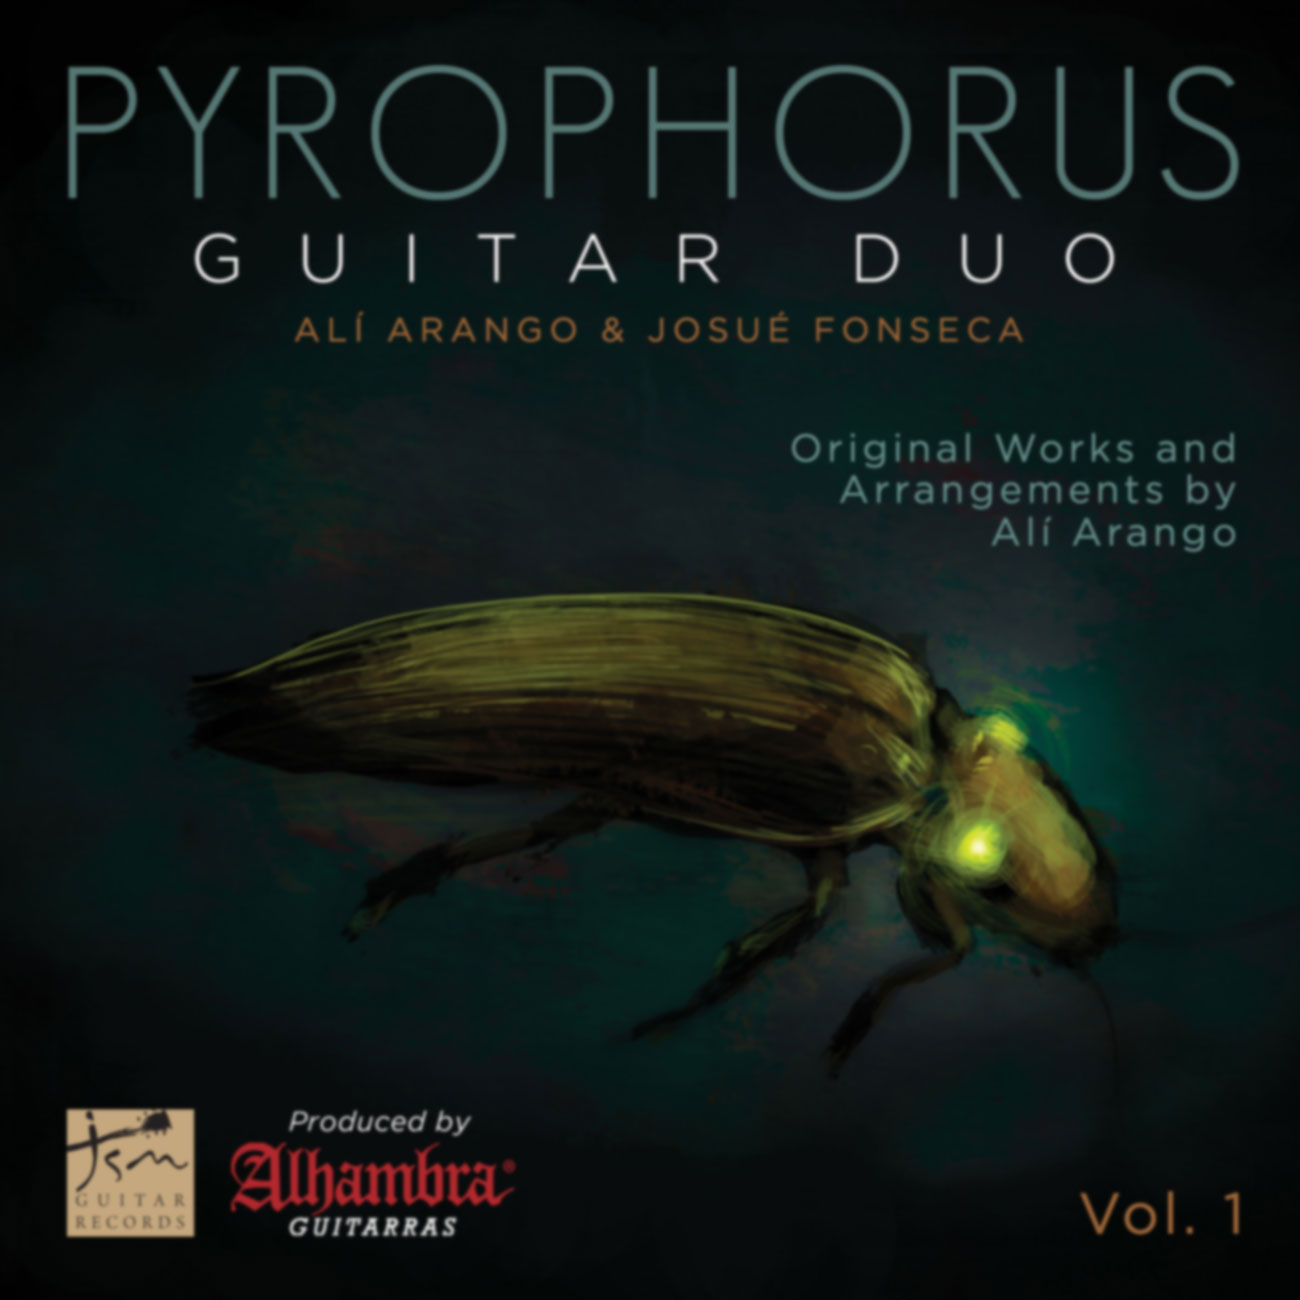 Vol.1 “Original Works and Arrangements by Alí Arango” // Pyrophurus Guitar Dúo